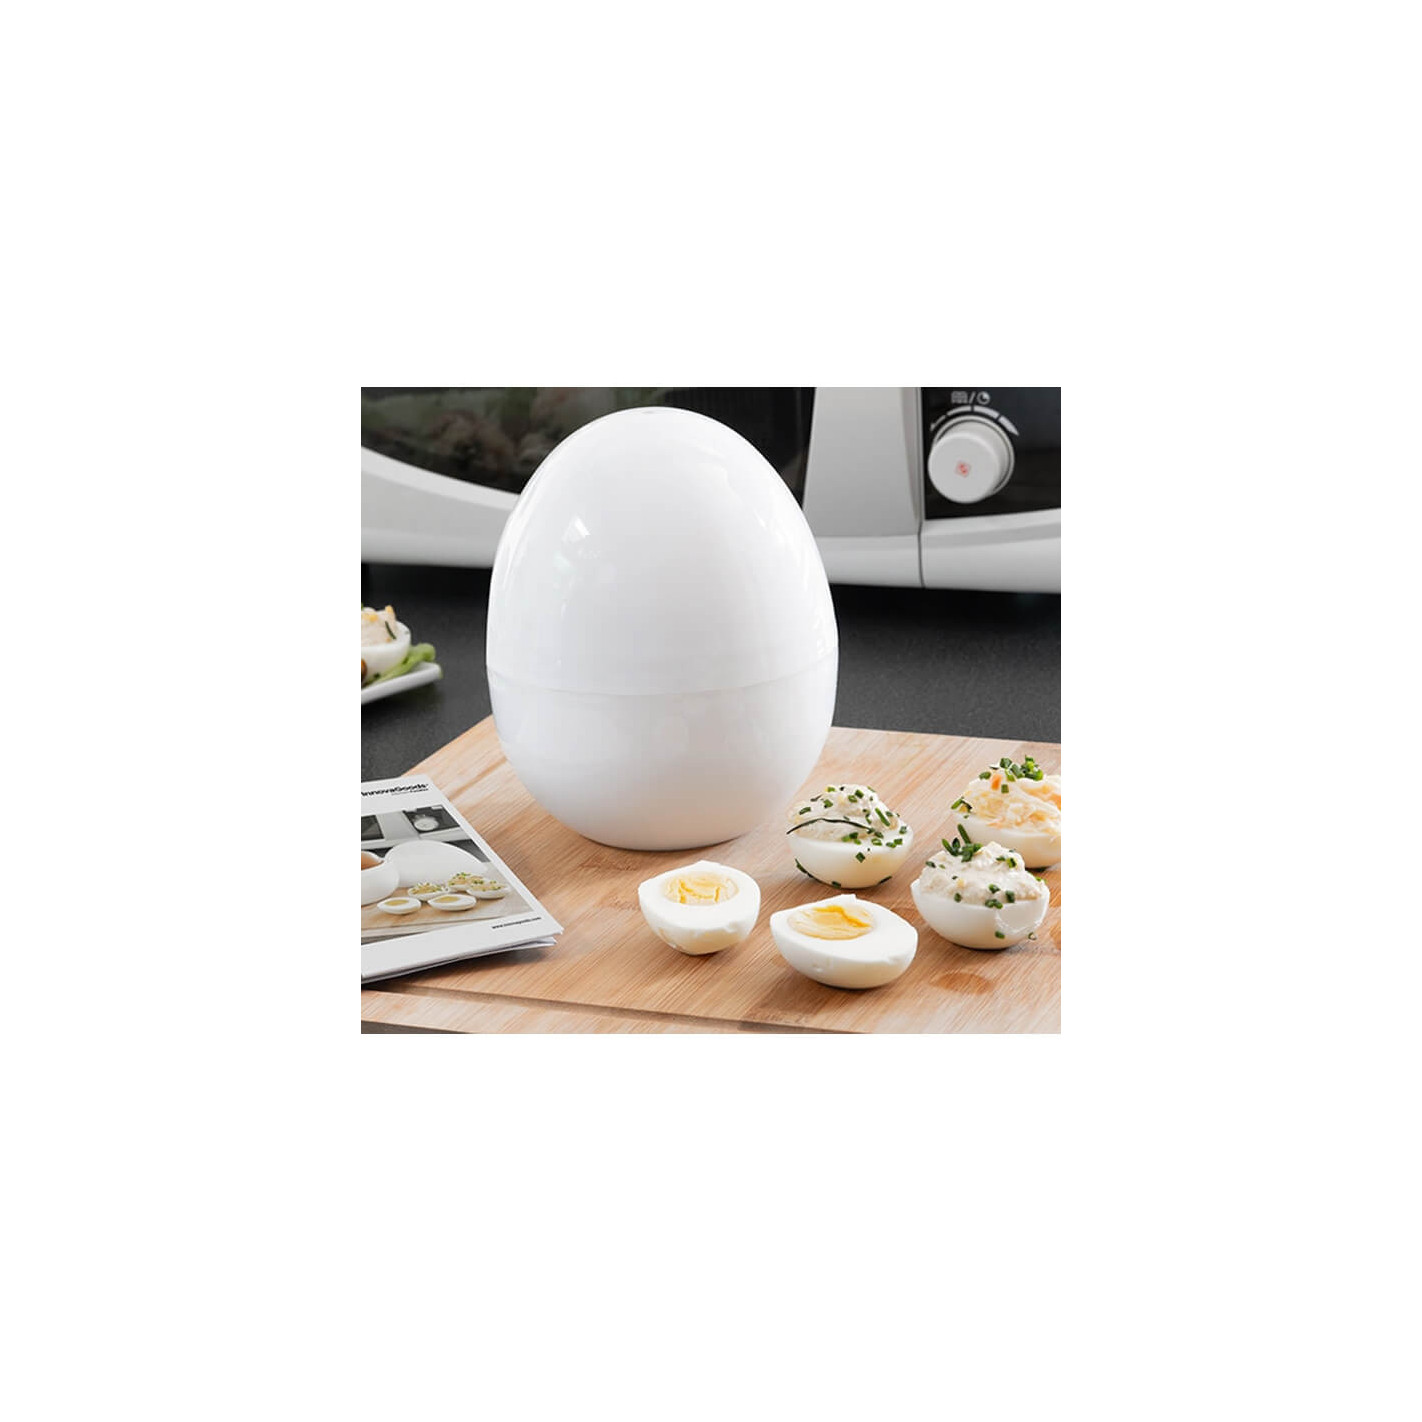 Cuecehuevos Cerámico para Microondas con Recetas Eggsira